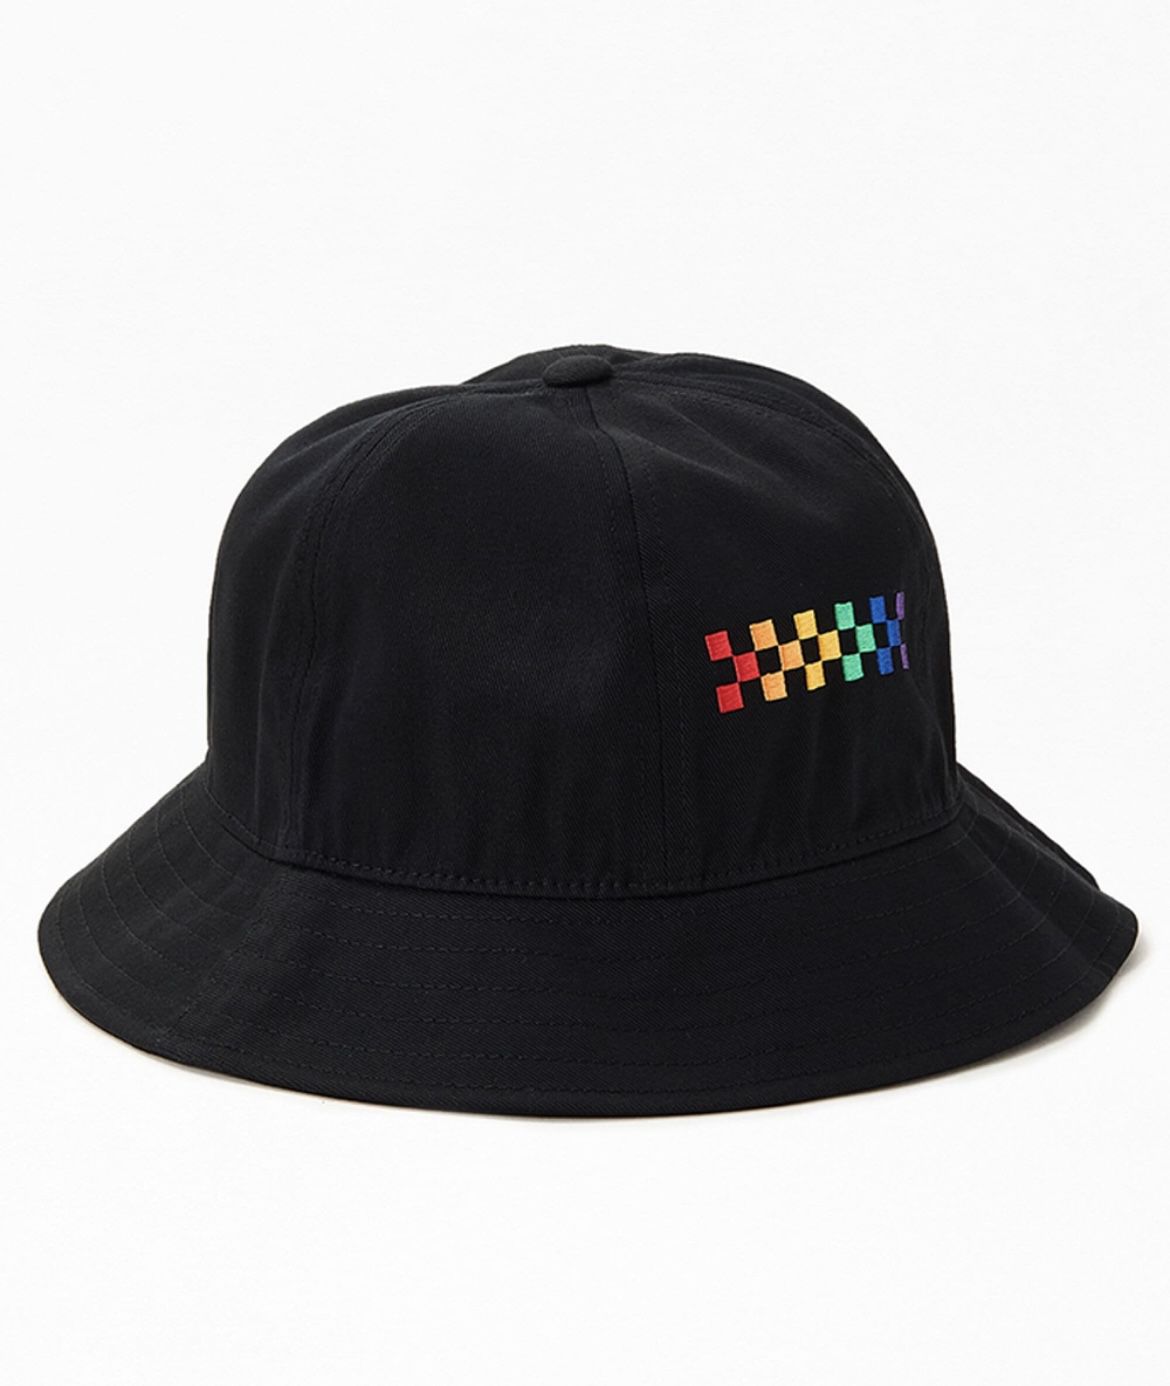 NWT Vans Pride Bucket Hat Size S/M